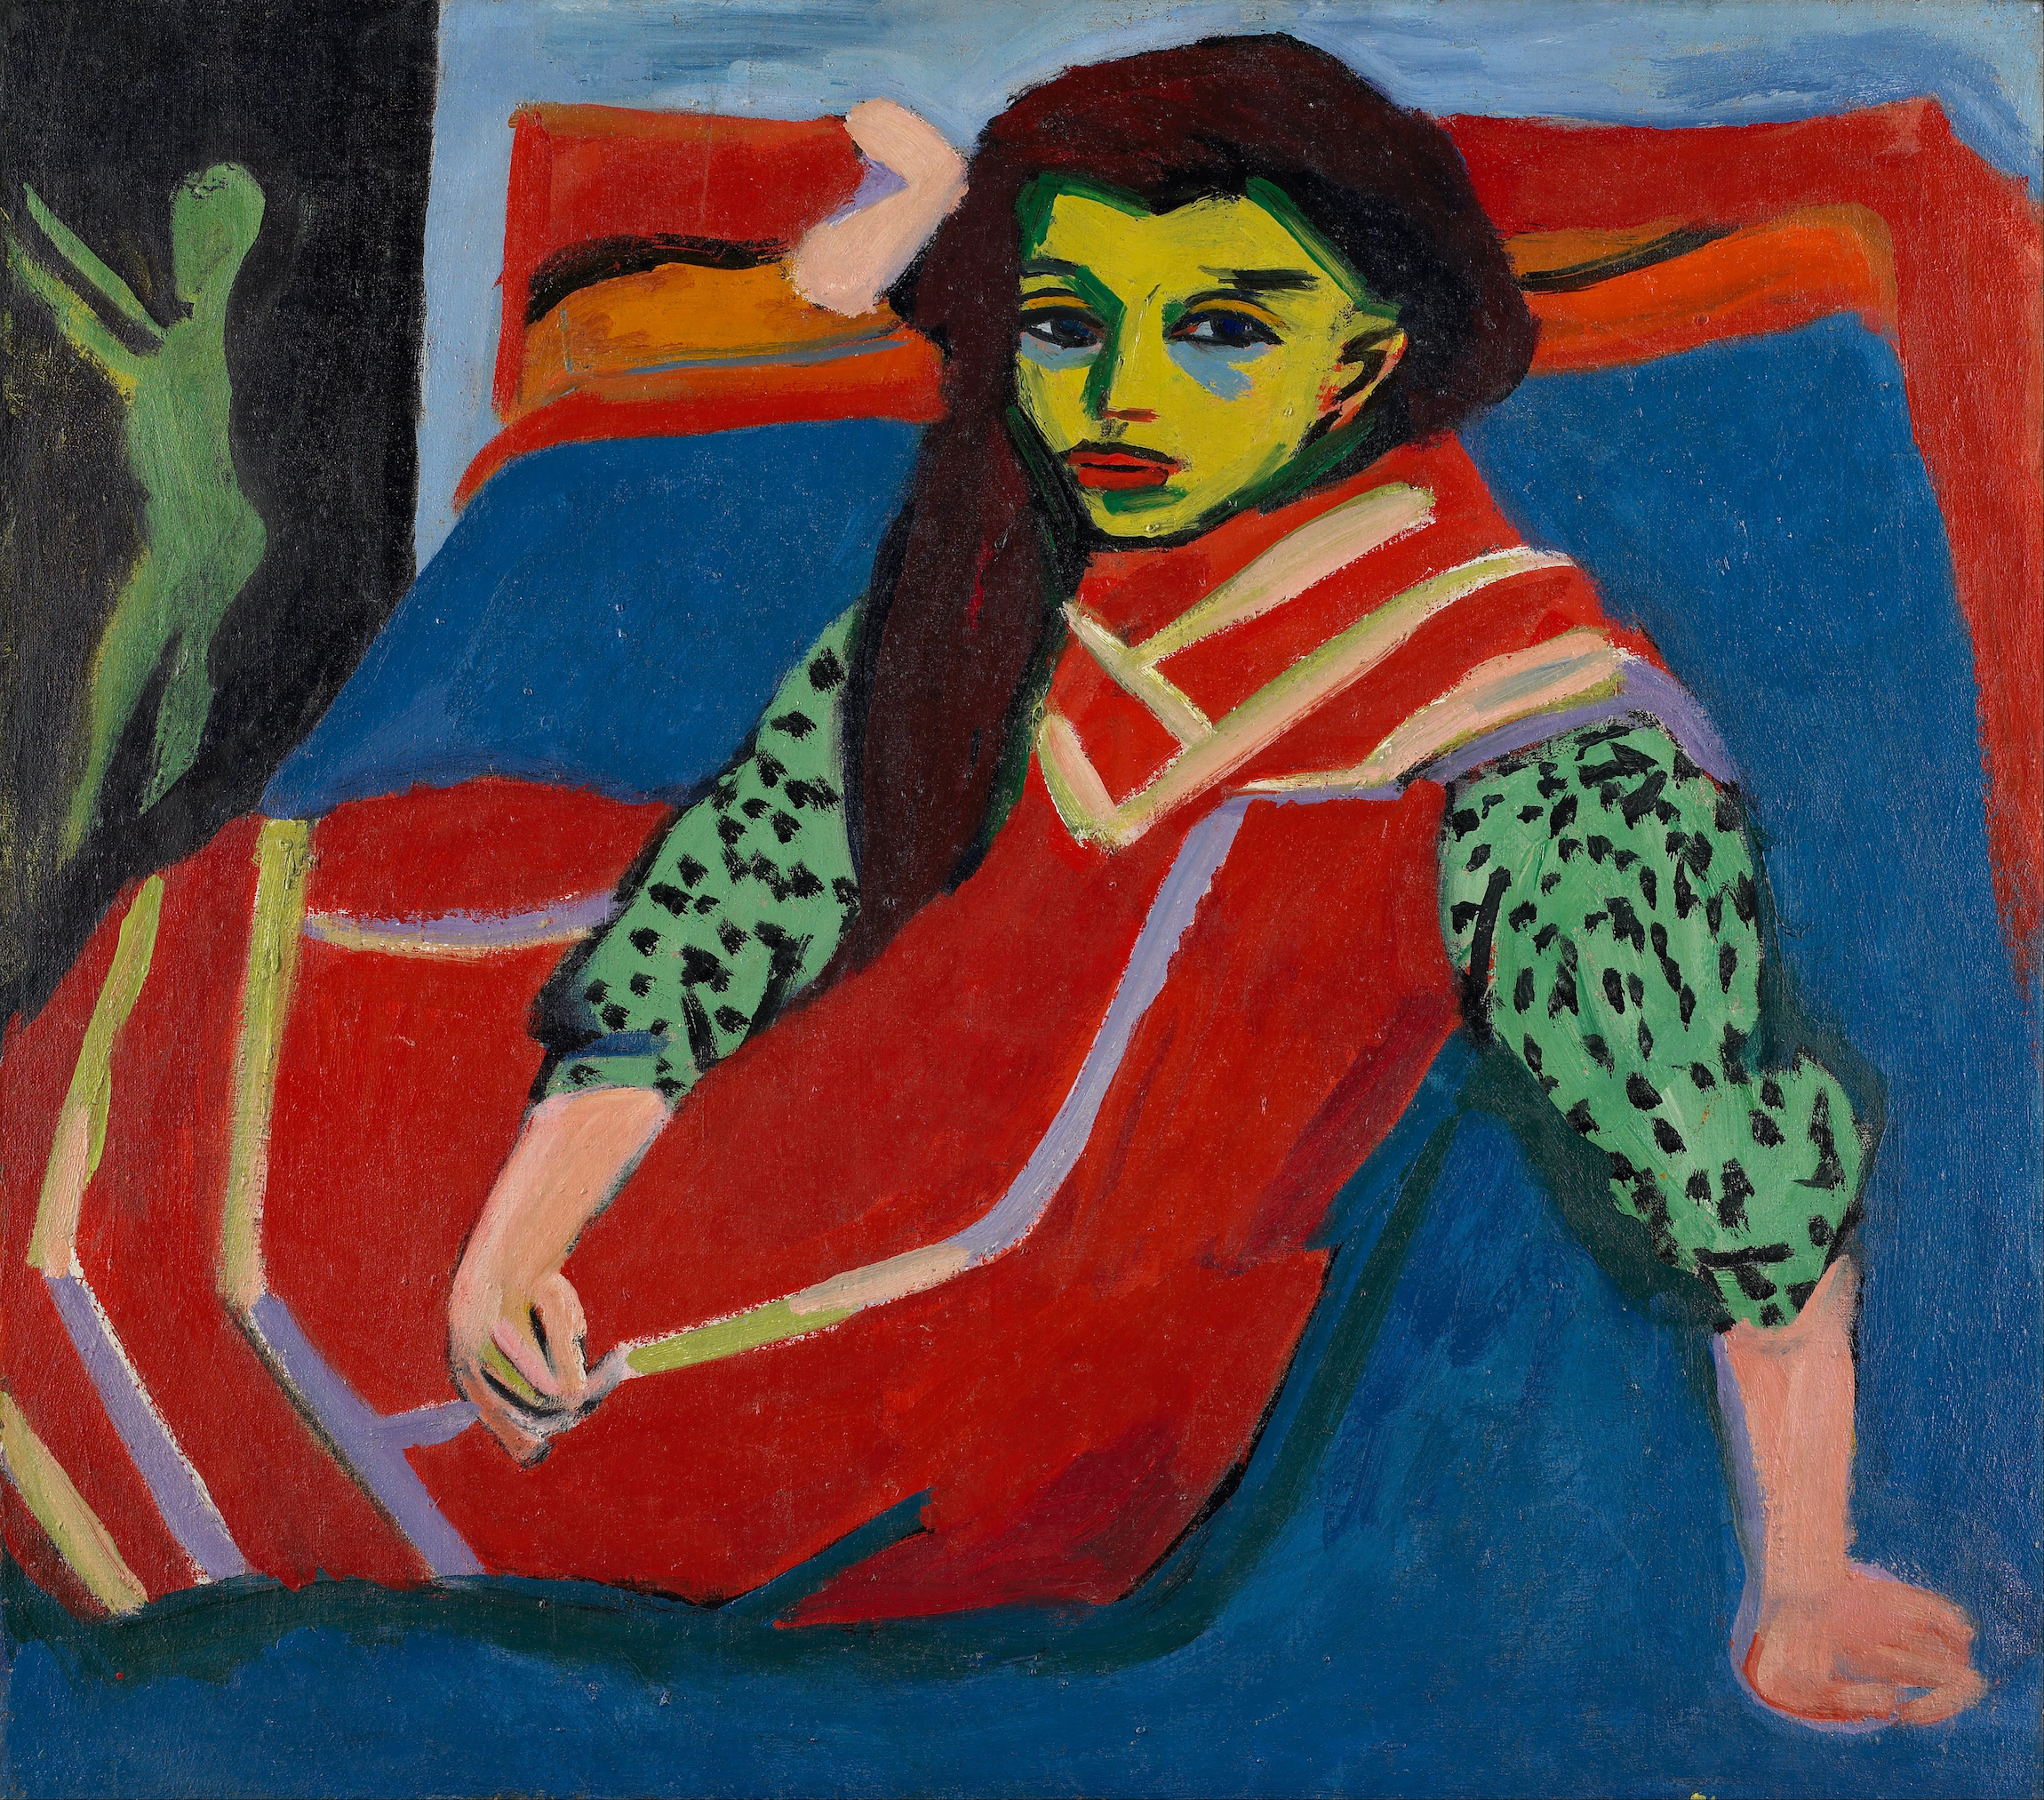 Fată așezată (Fränzi Fehrmann) by Ernst Ludwig Kirchner - 1910 - 75.5 x 99.5 cm 